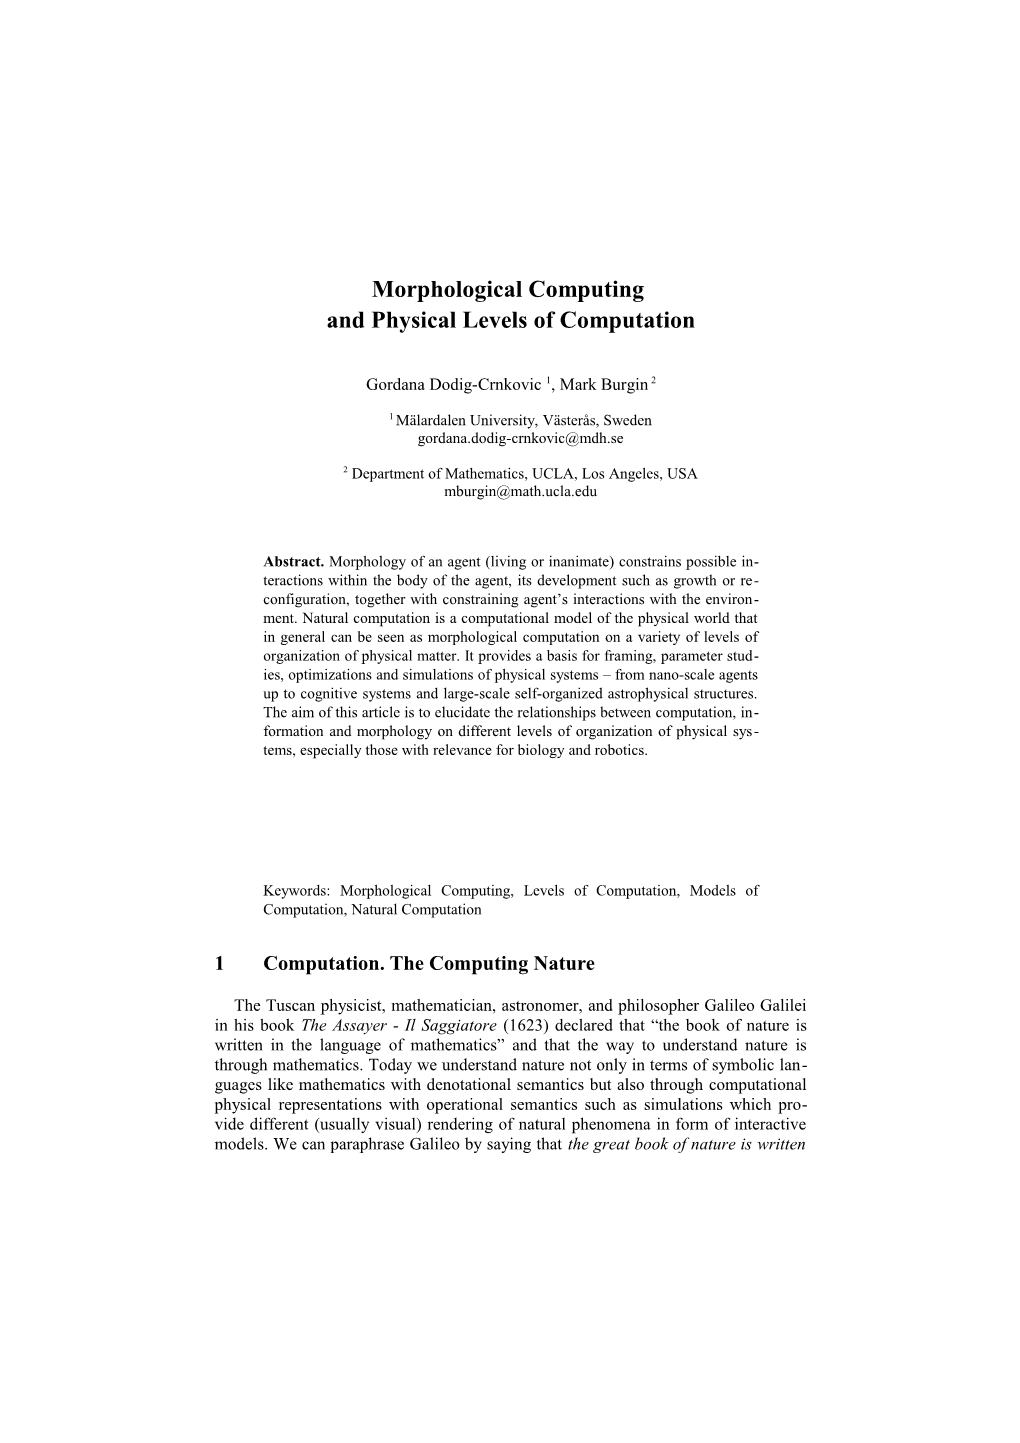 Morphological Computing and Physical Levels of Computation